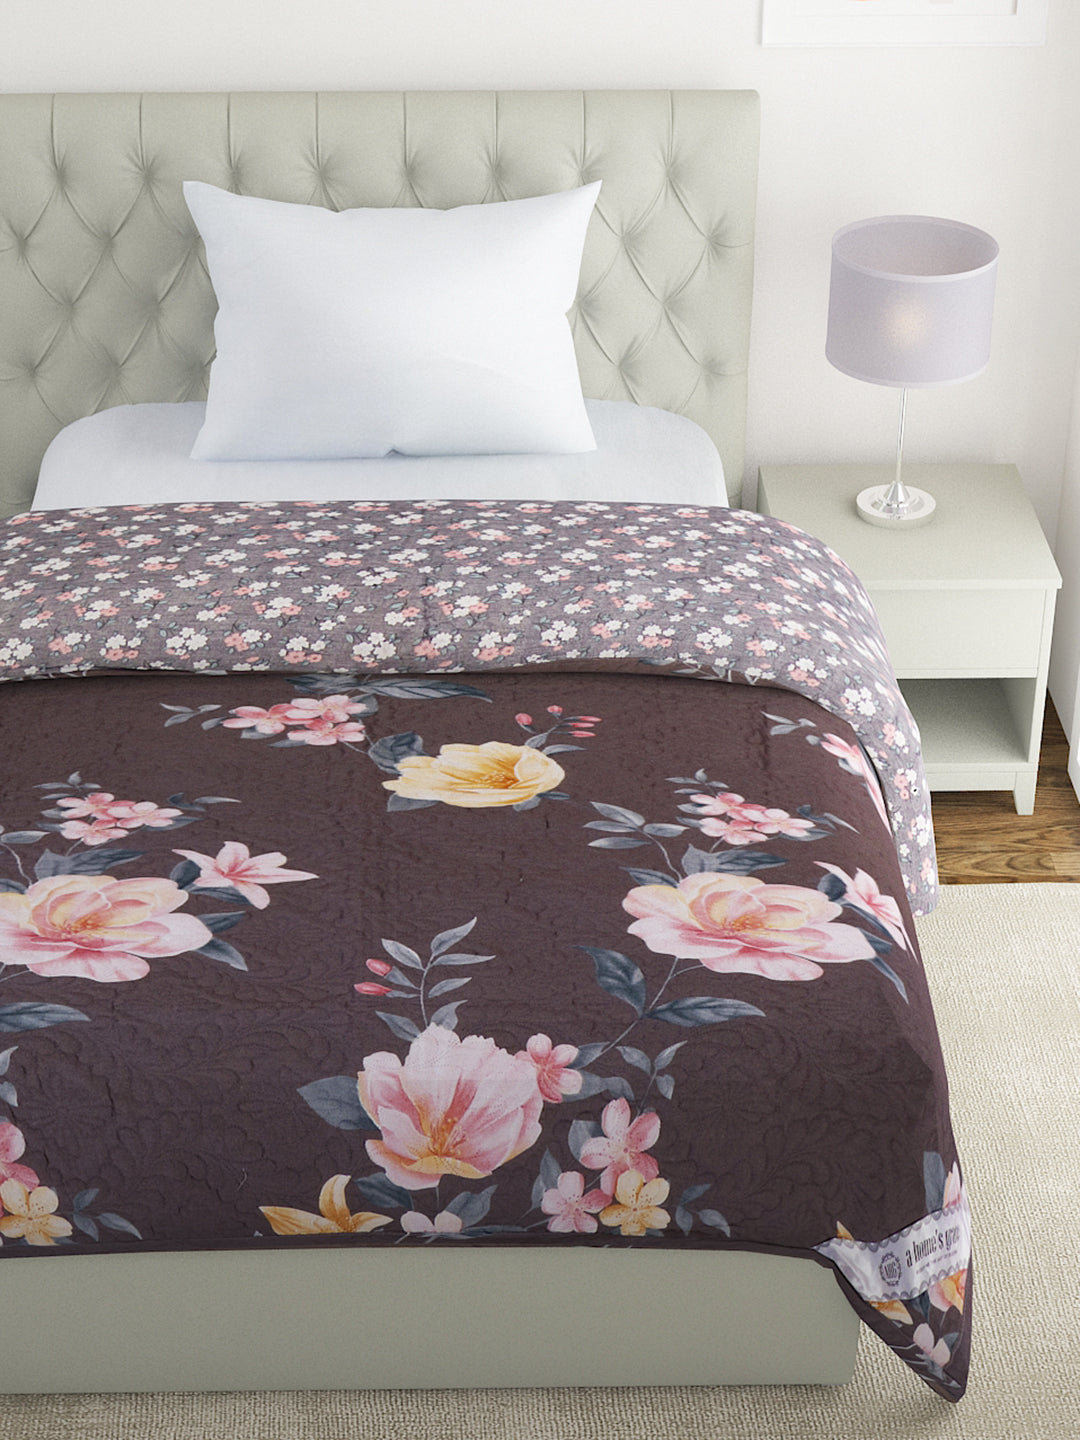 Floral Print Set of 2 Single Bed Light Weight Comforter-Dark Brown